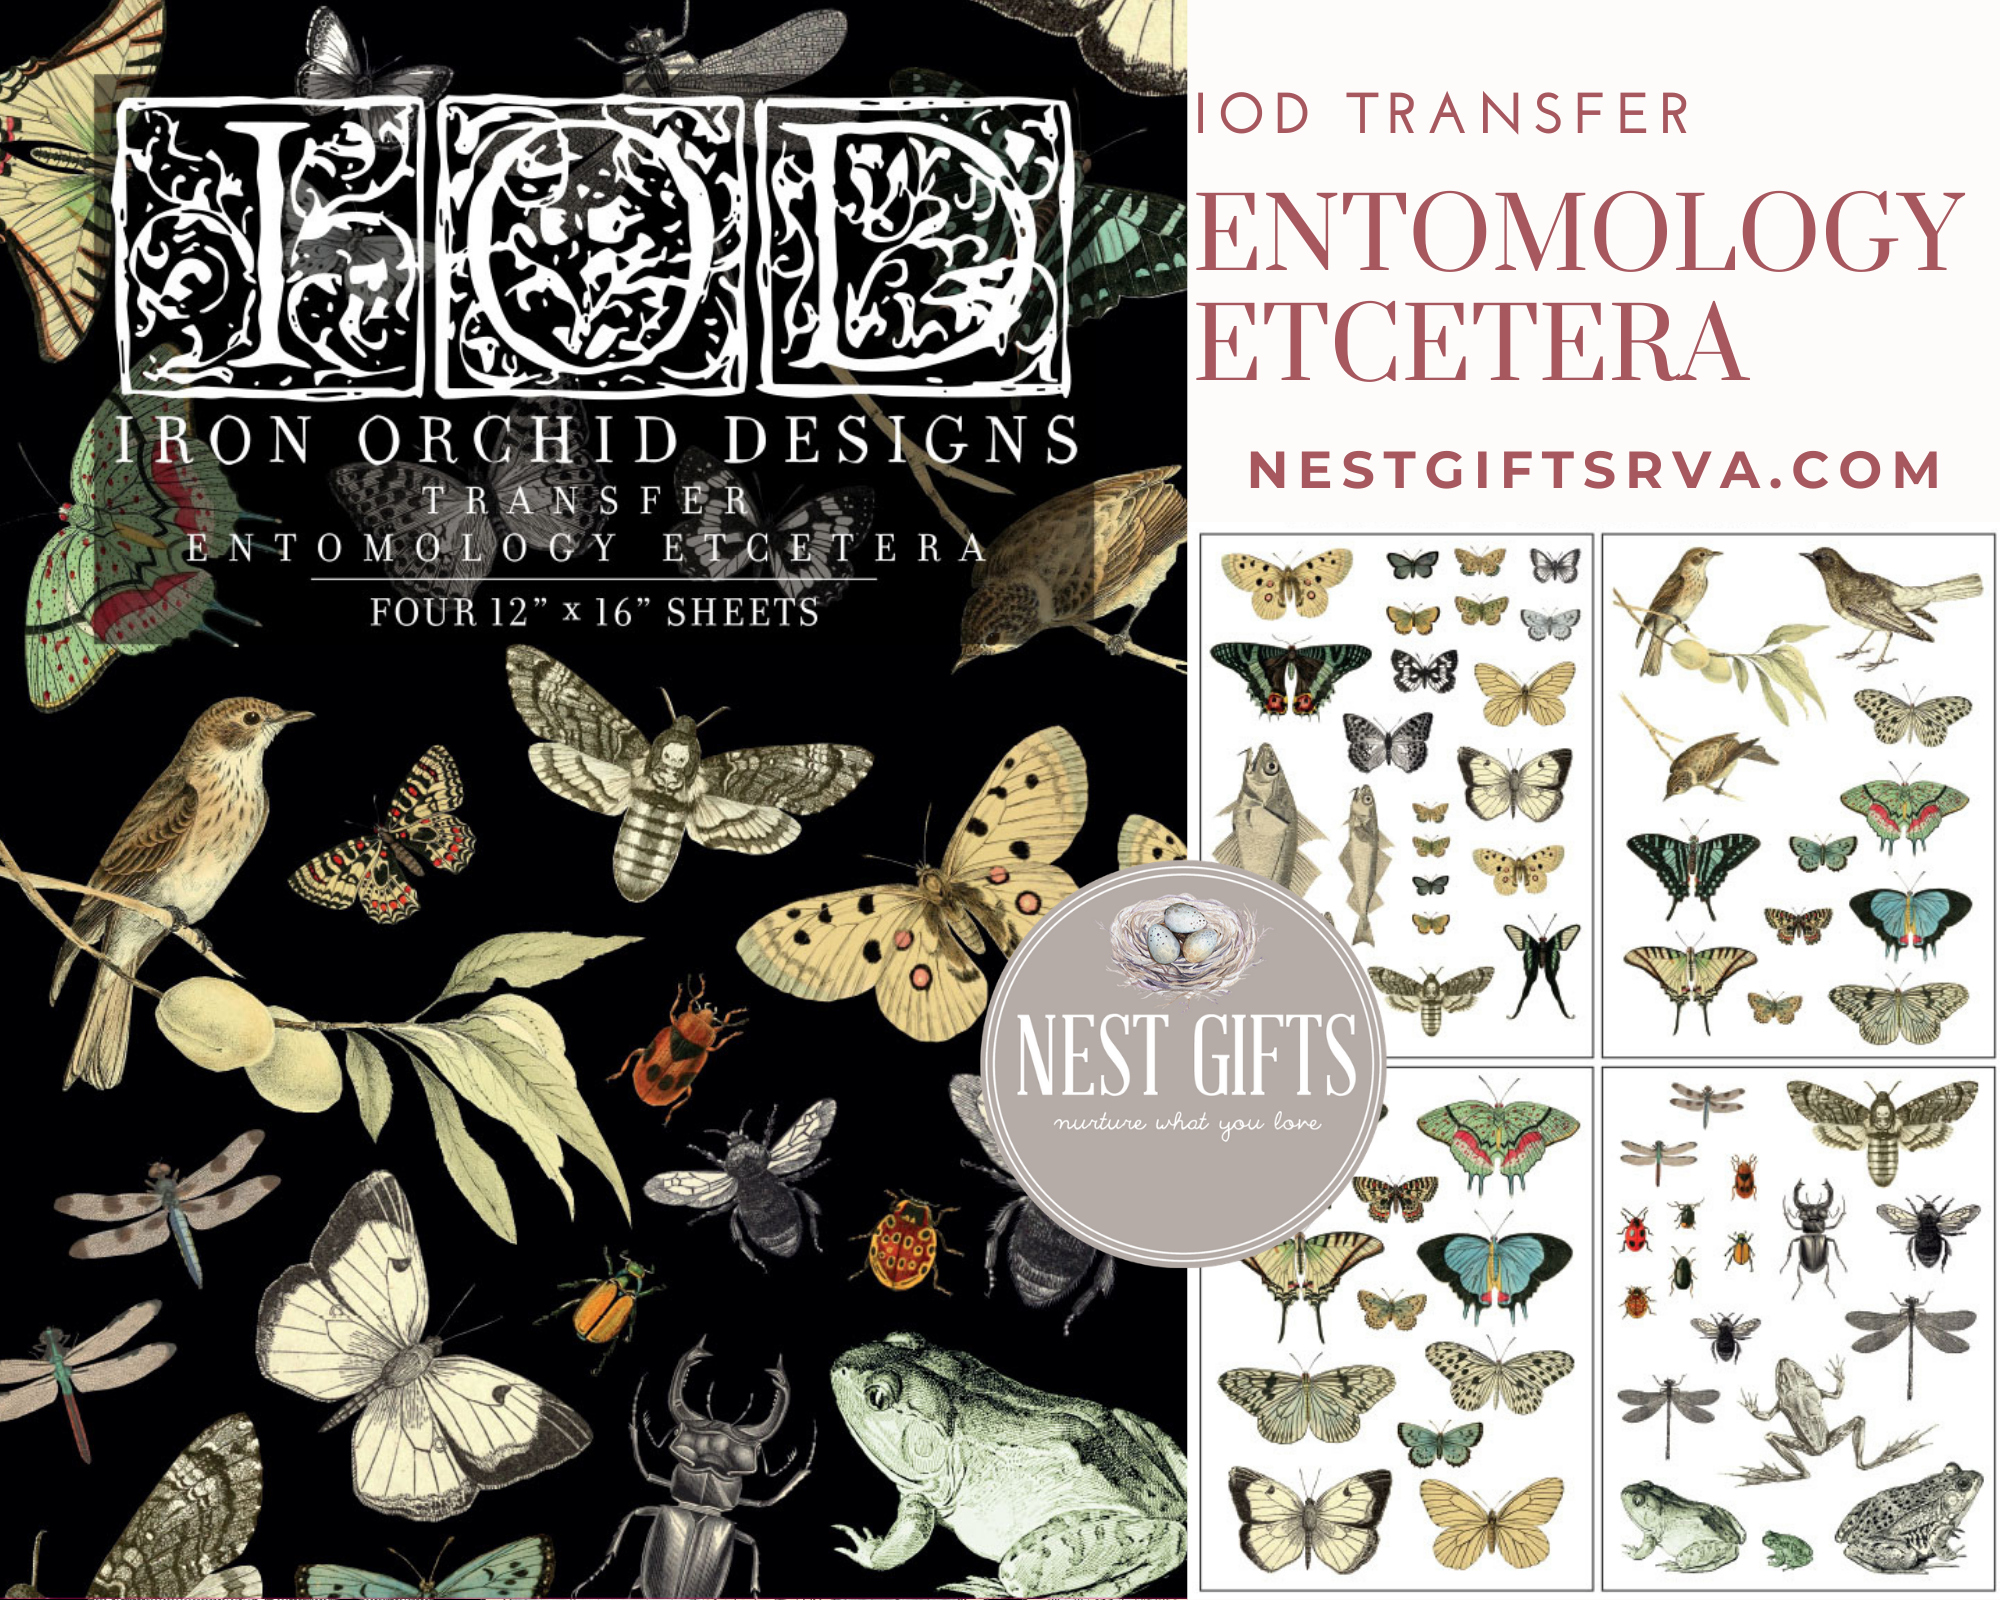 IOD Decor Transfers Entomology Etcetera